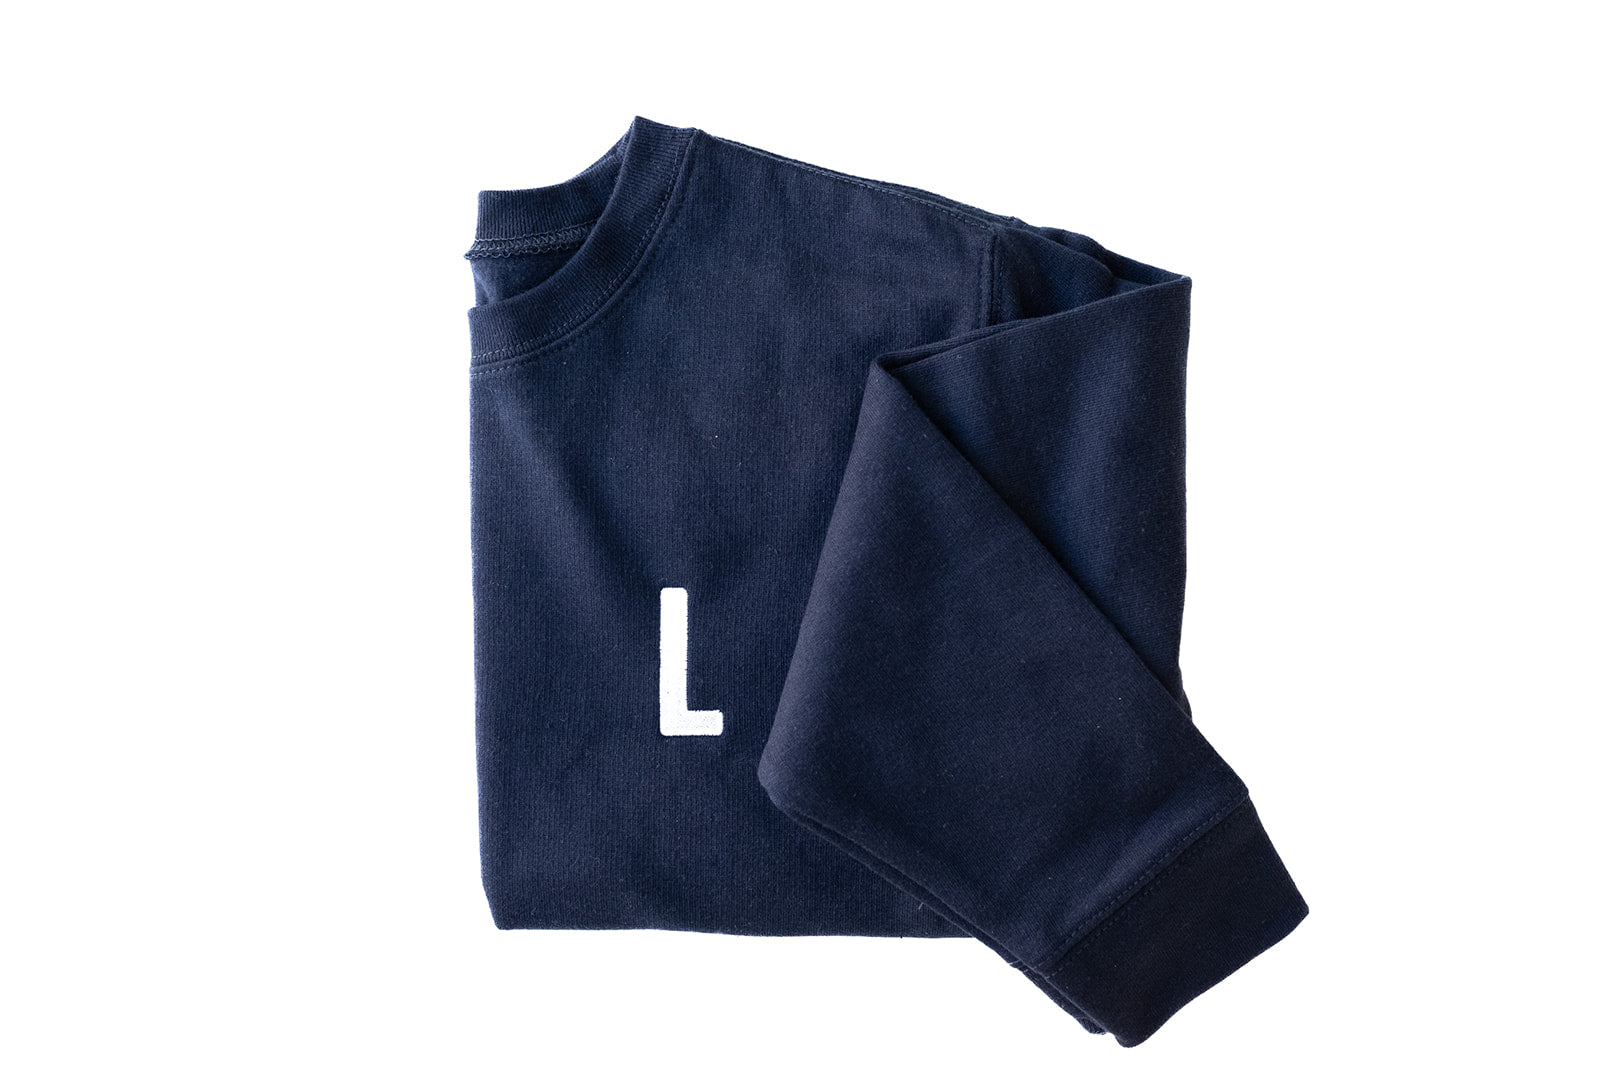 Sample Sale - Navy Letter Sweatshirt - Letter G - Size 3T